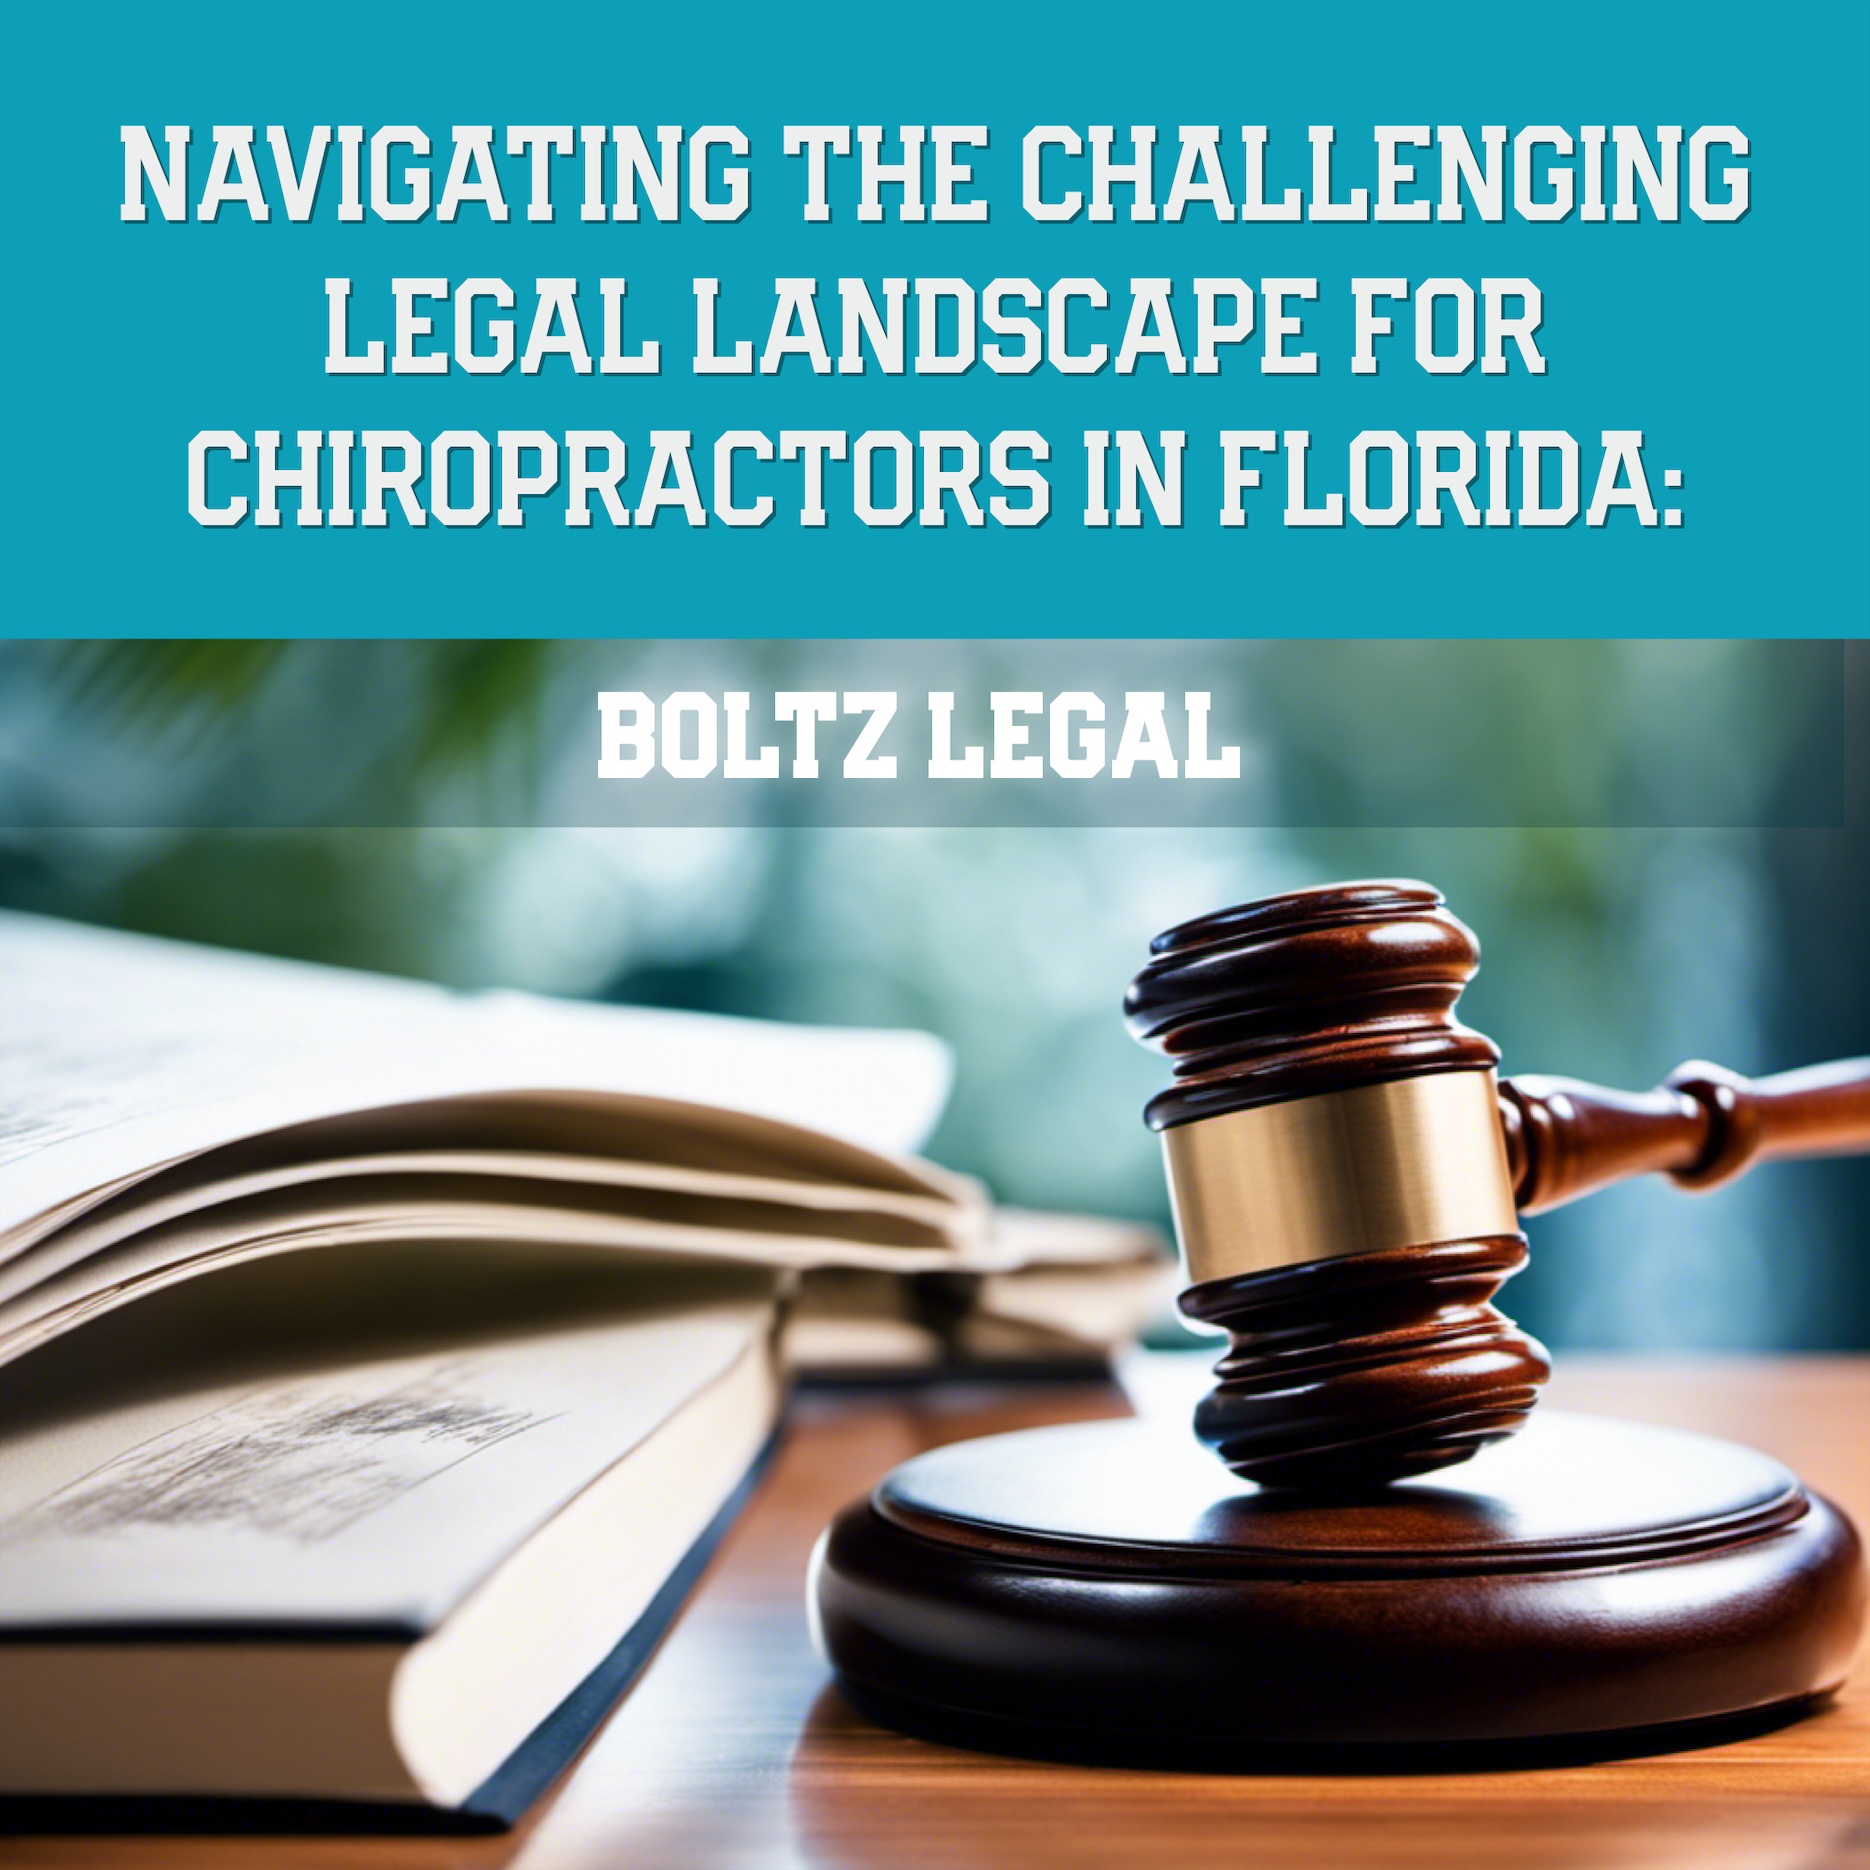 Chiropractors legal landscape in Florida